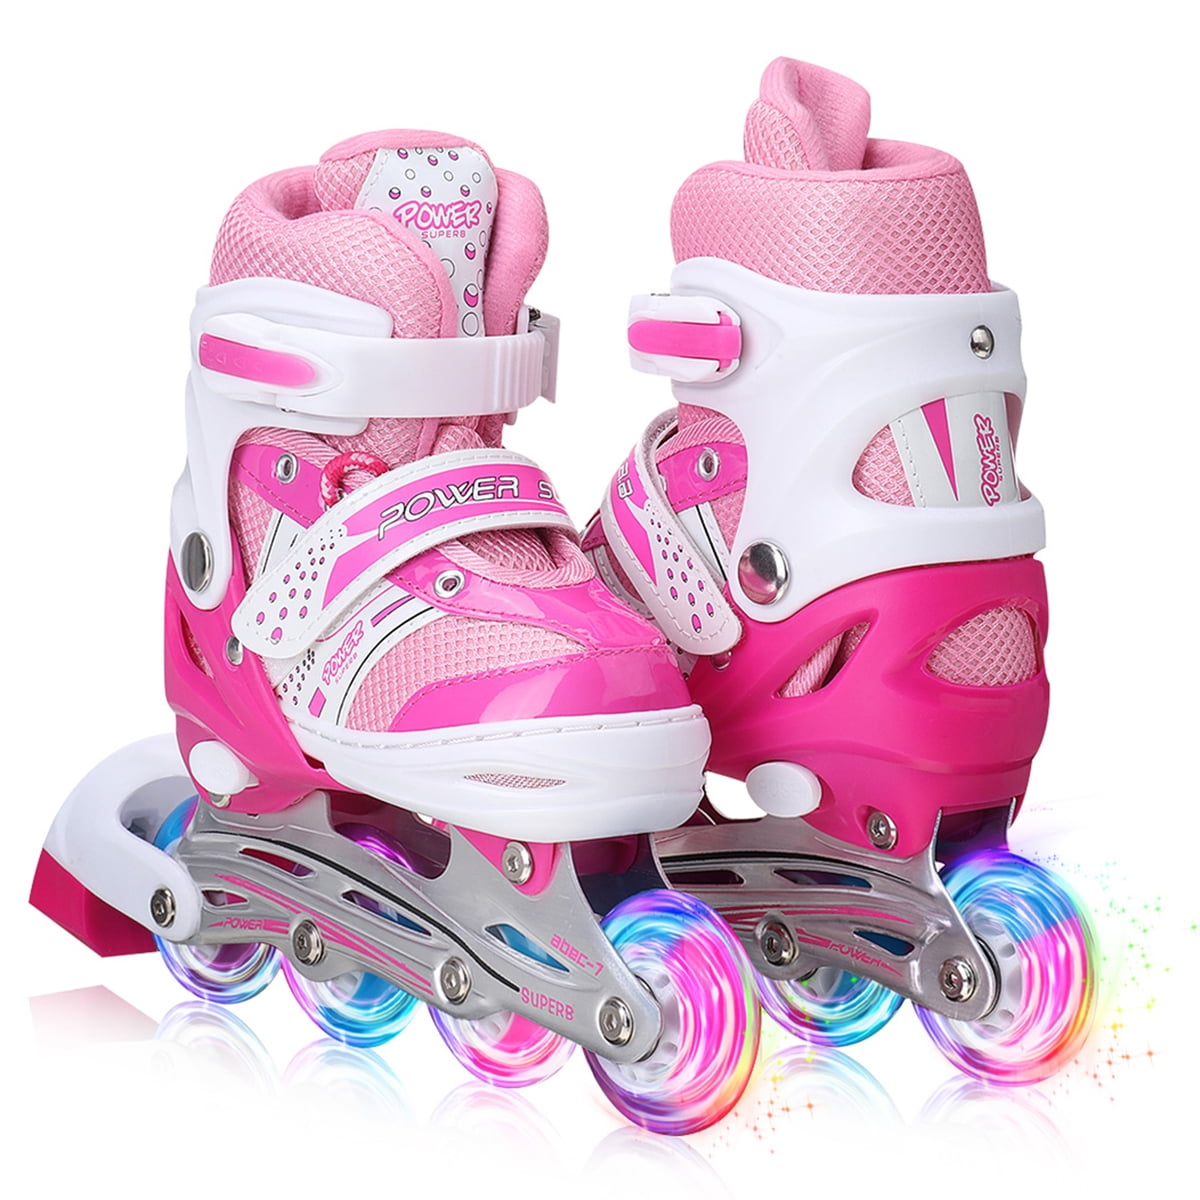 Light Up Inline Skates For Kids, Boys and Girls Adjustable Skates Shoes Roller Skates All Illuminating Rollerblading for Children Youth, Blue / Pink, Sizes 13M US Little Kid - 5.5M US Big Kid